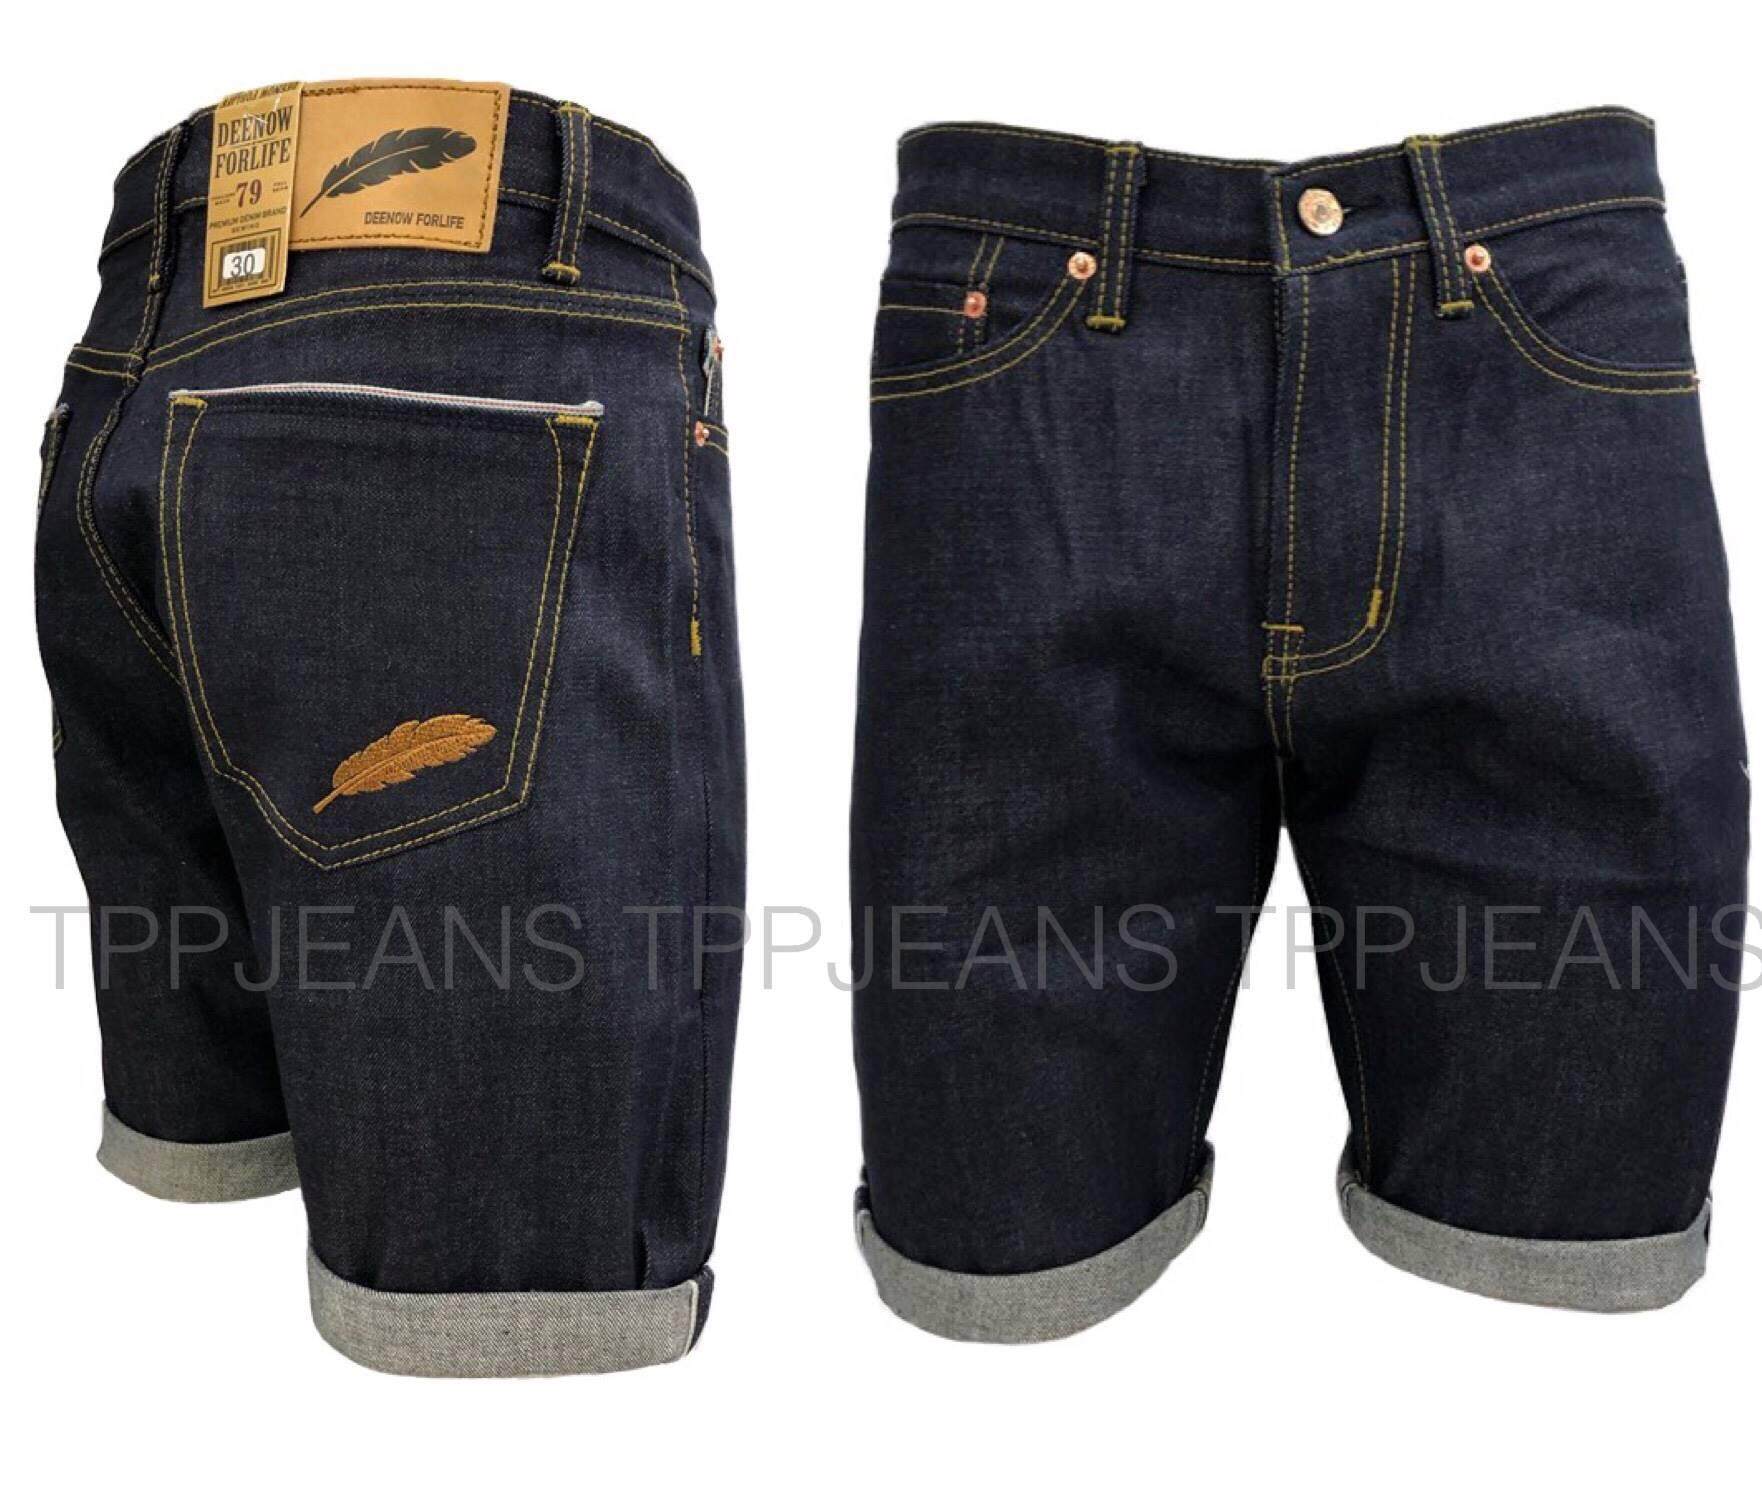 TPPJEANS DN DarkBlue Raw Denim Selvedge กางเกงยีนส์ขาสั้นผ้าดิบริมแดง ปักขนนกเดินริมกระเป๋า งานตัดเย็บอย่างดี Size 28-44 รับชำระปลายทาง